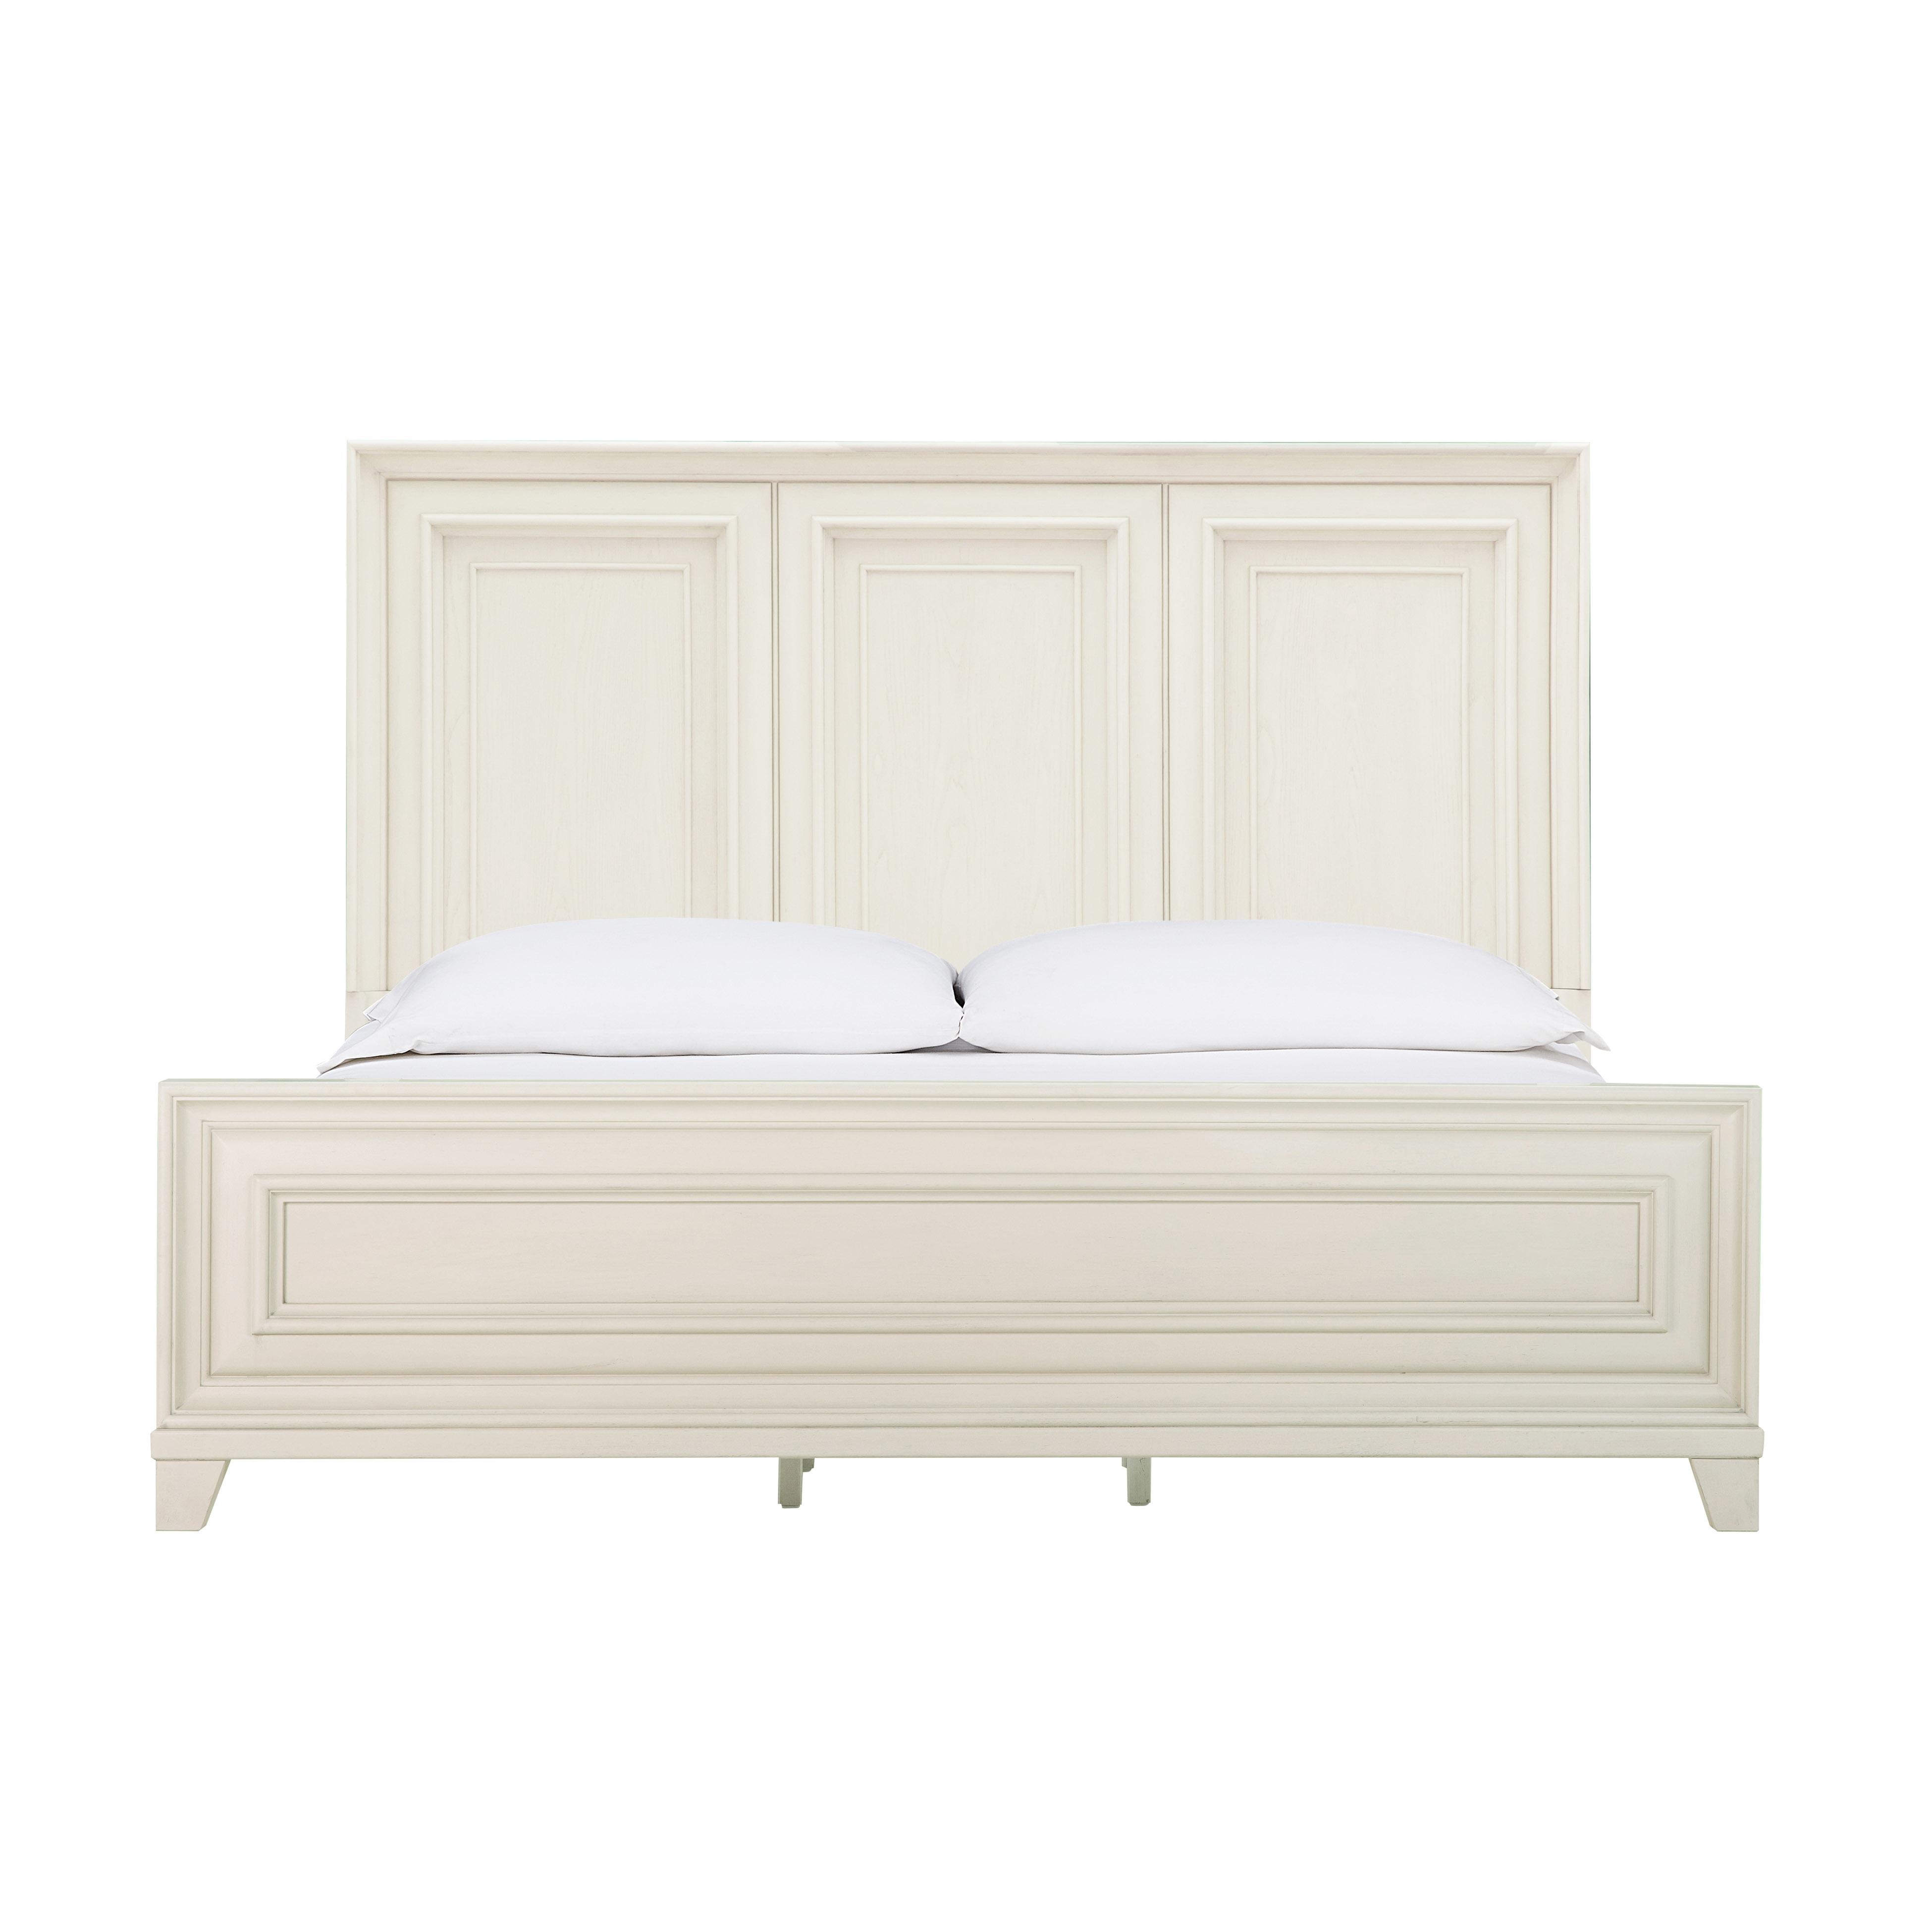 Montauk Weathered White King Panel Bed - Image 1